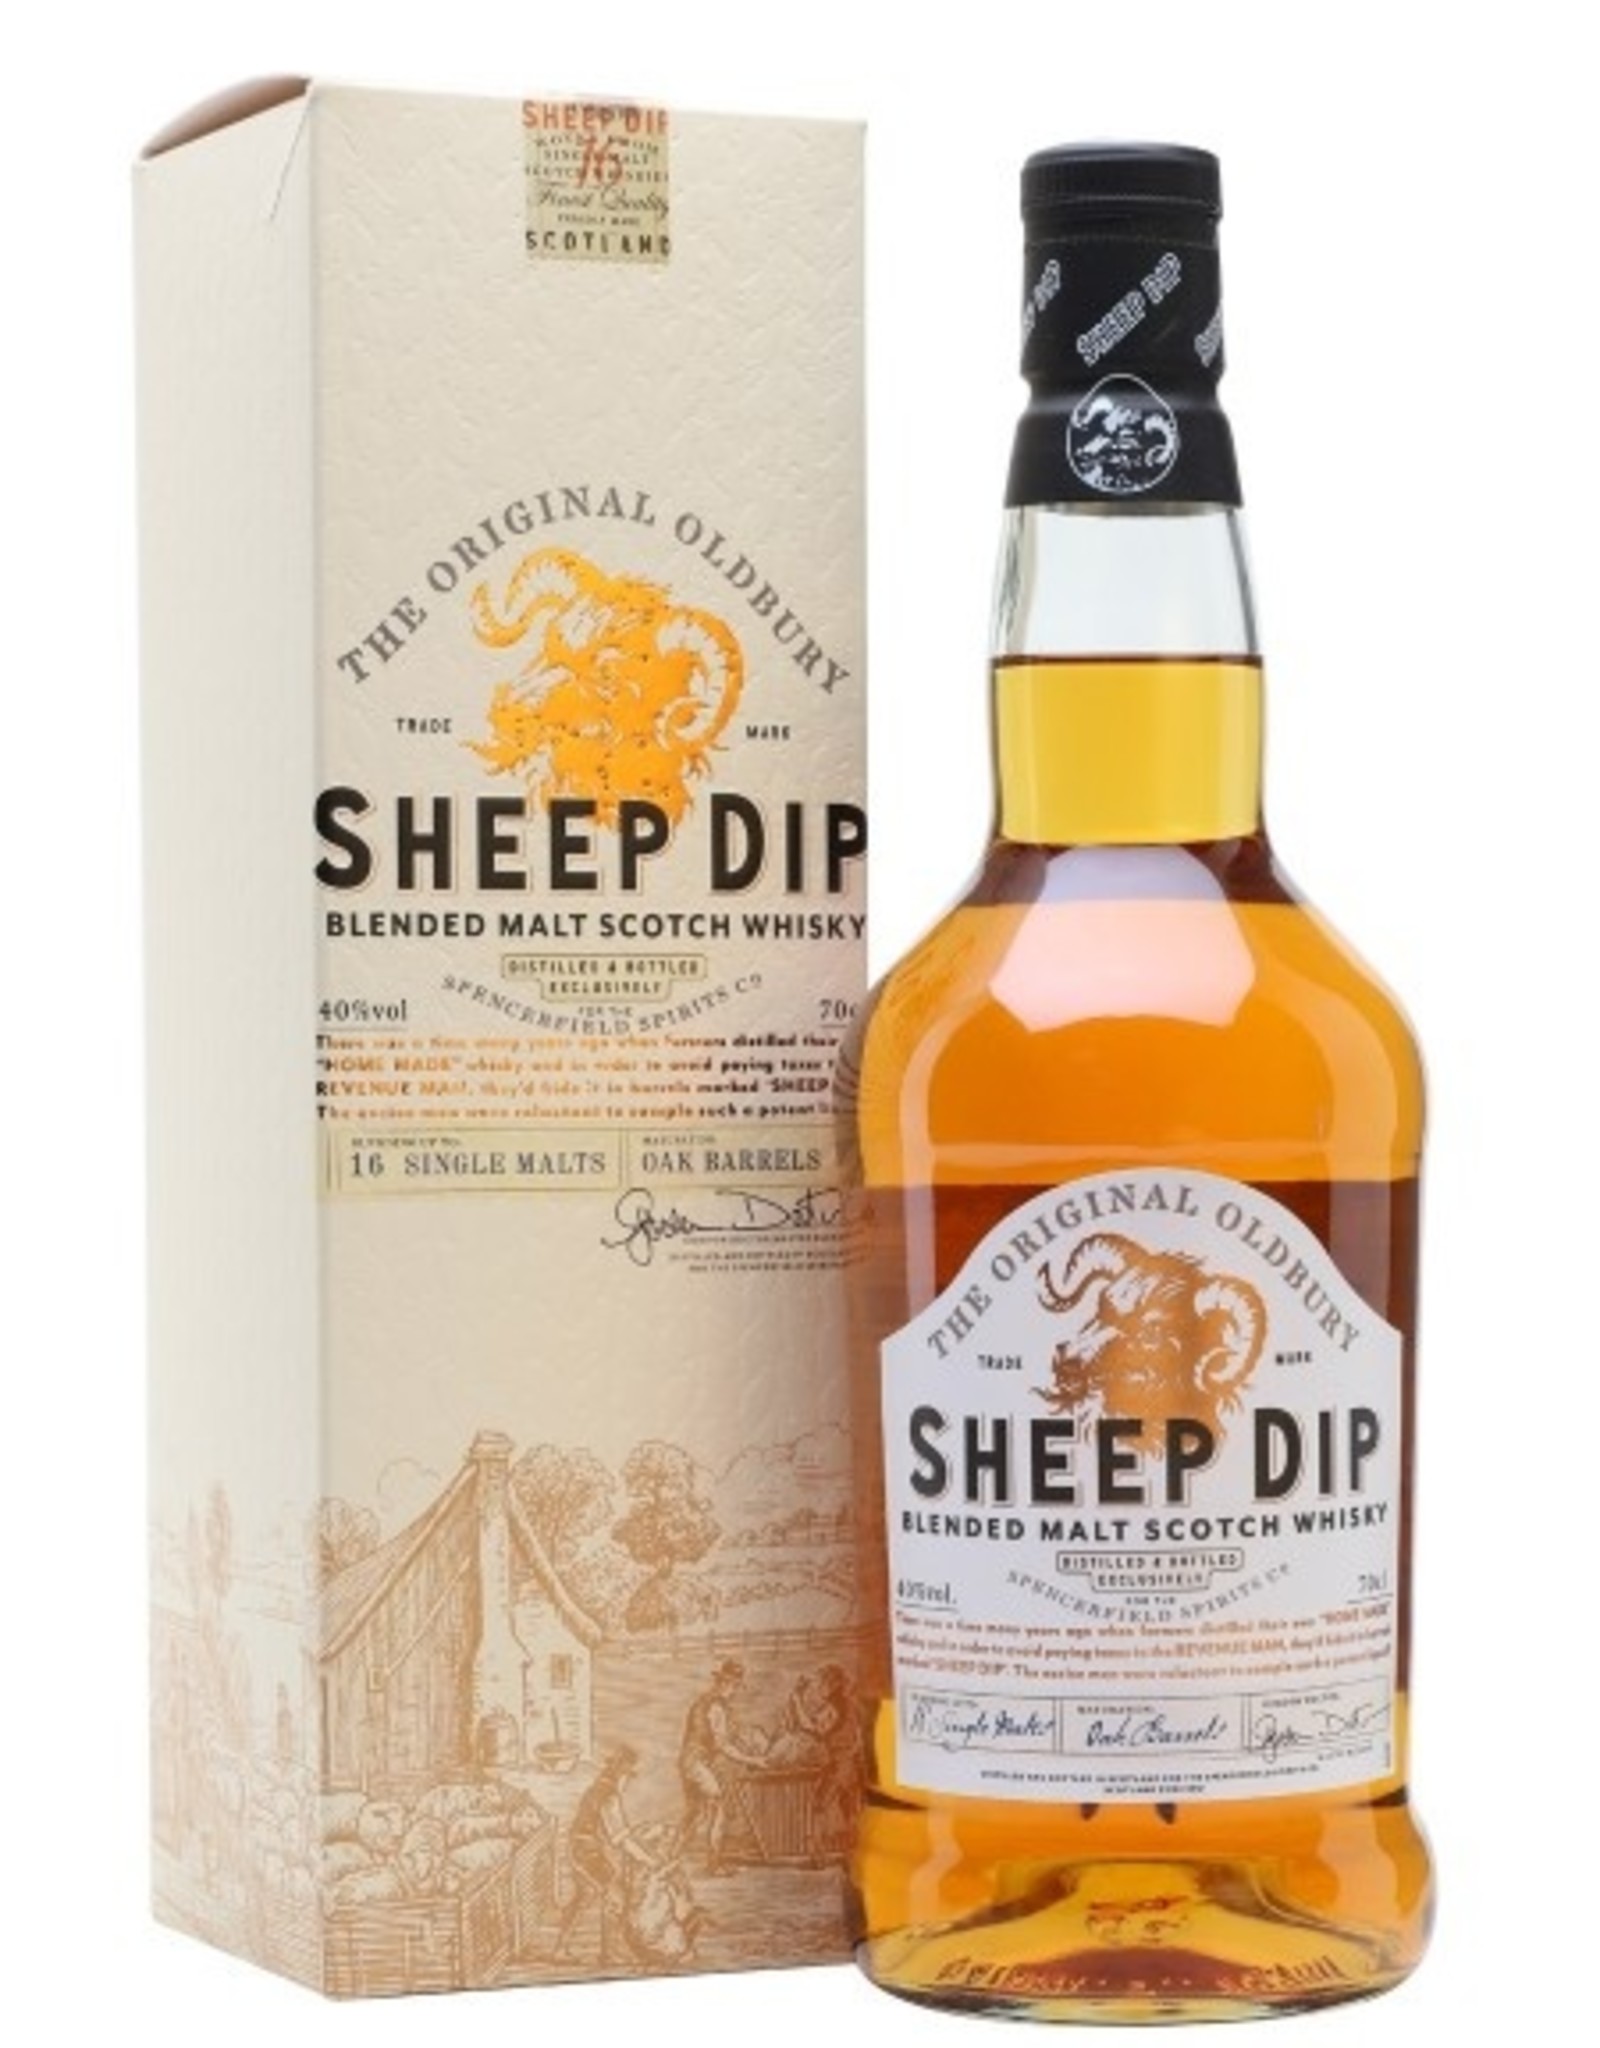 Sheep Dip Scotch 750ML